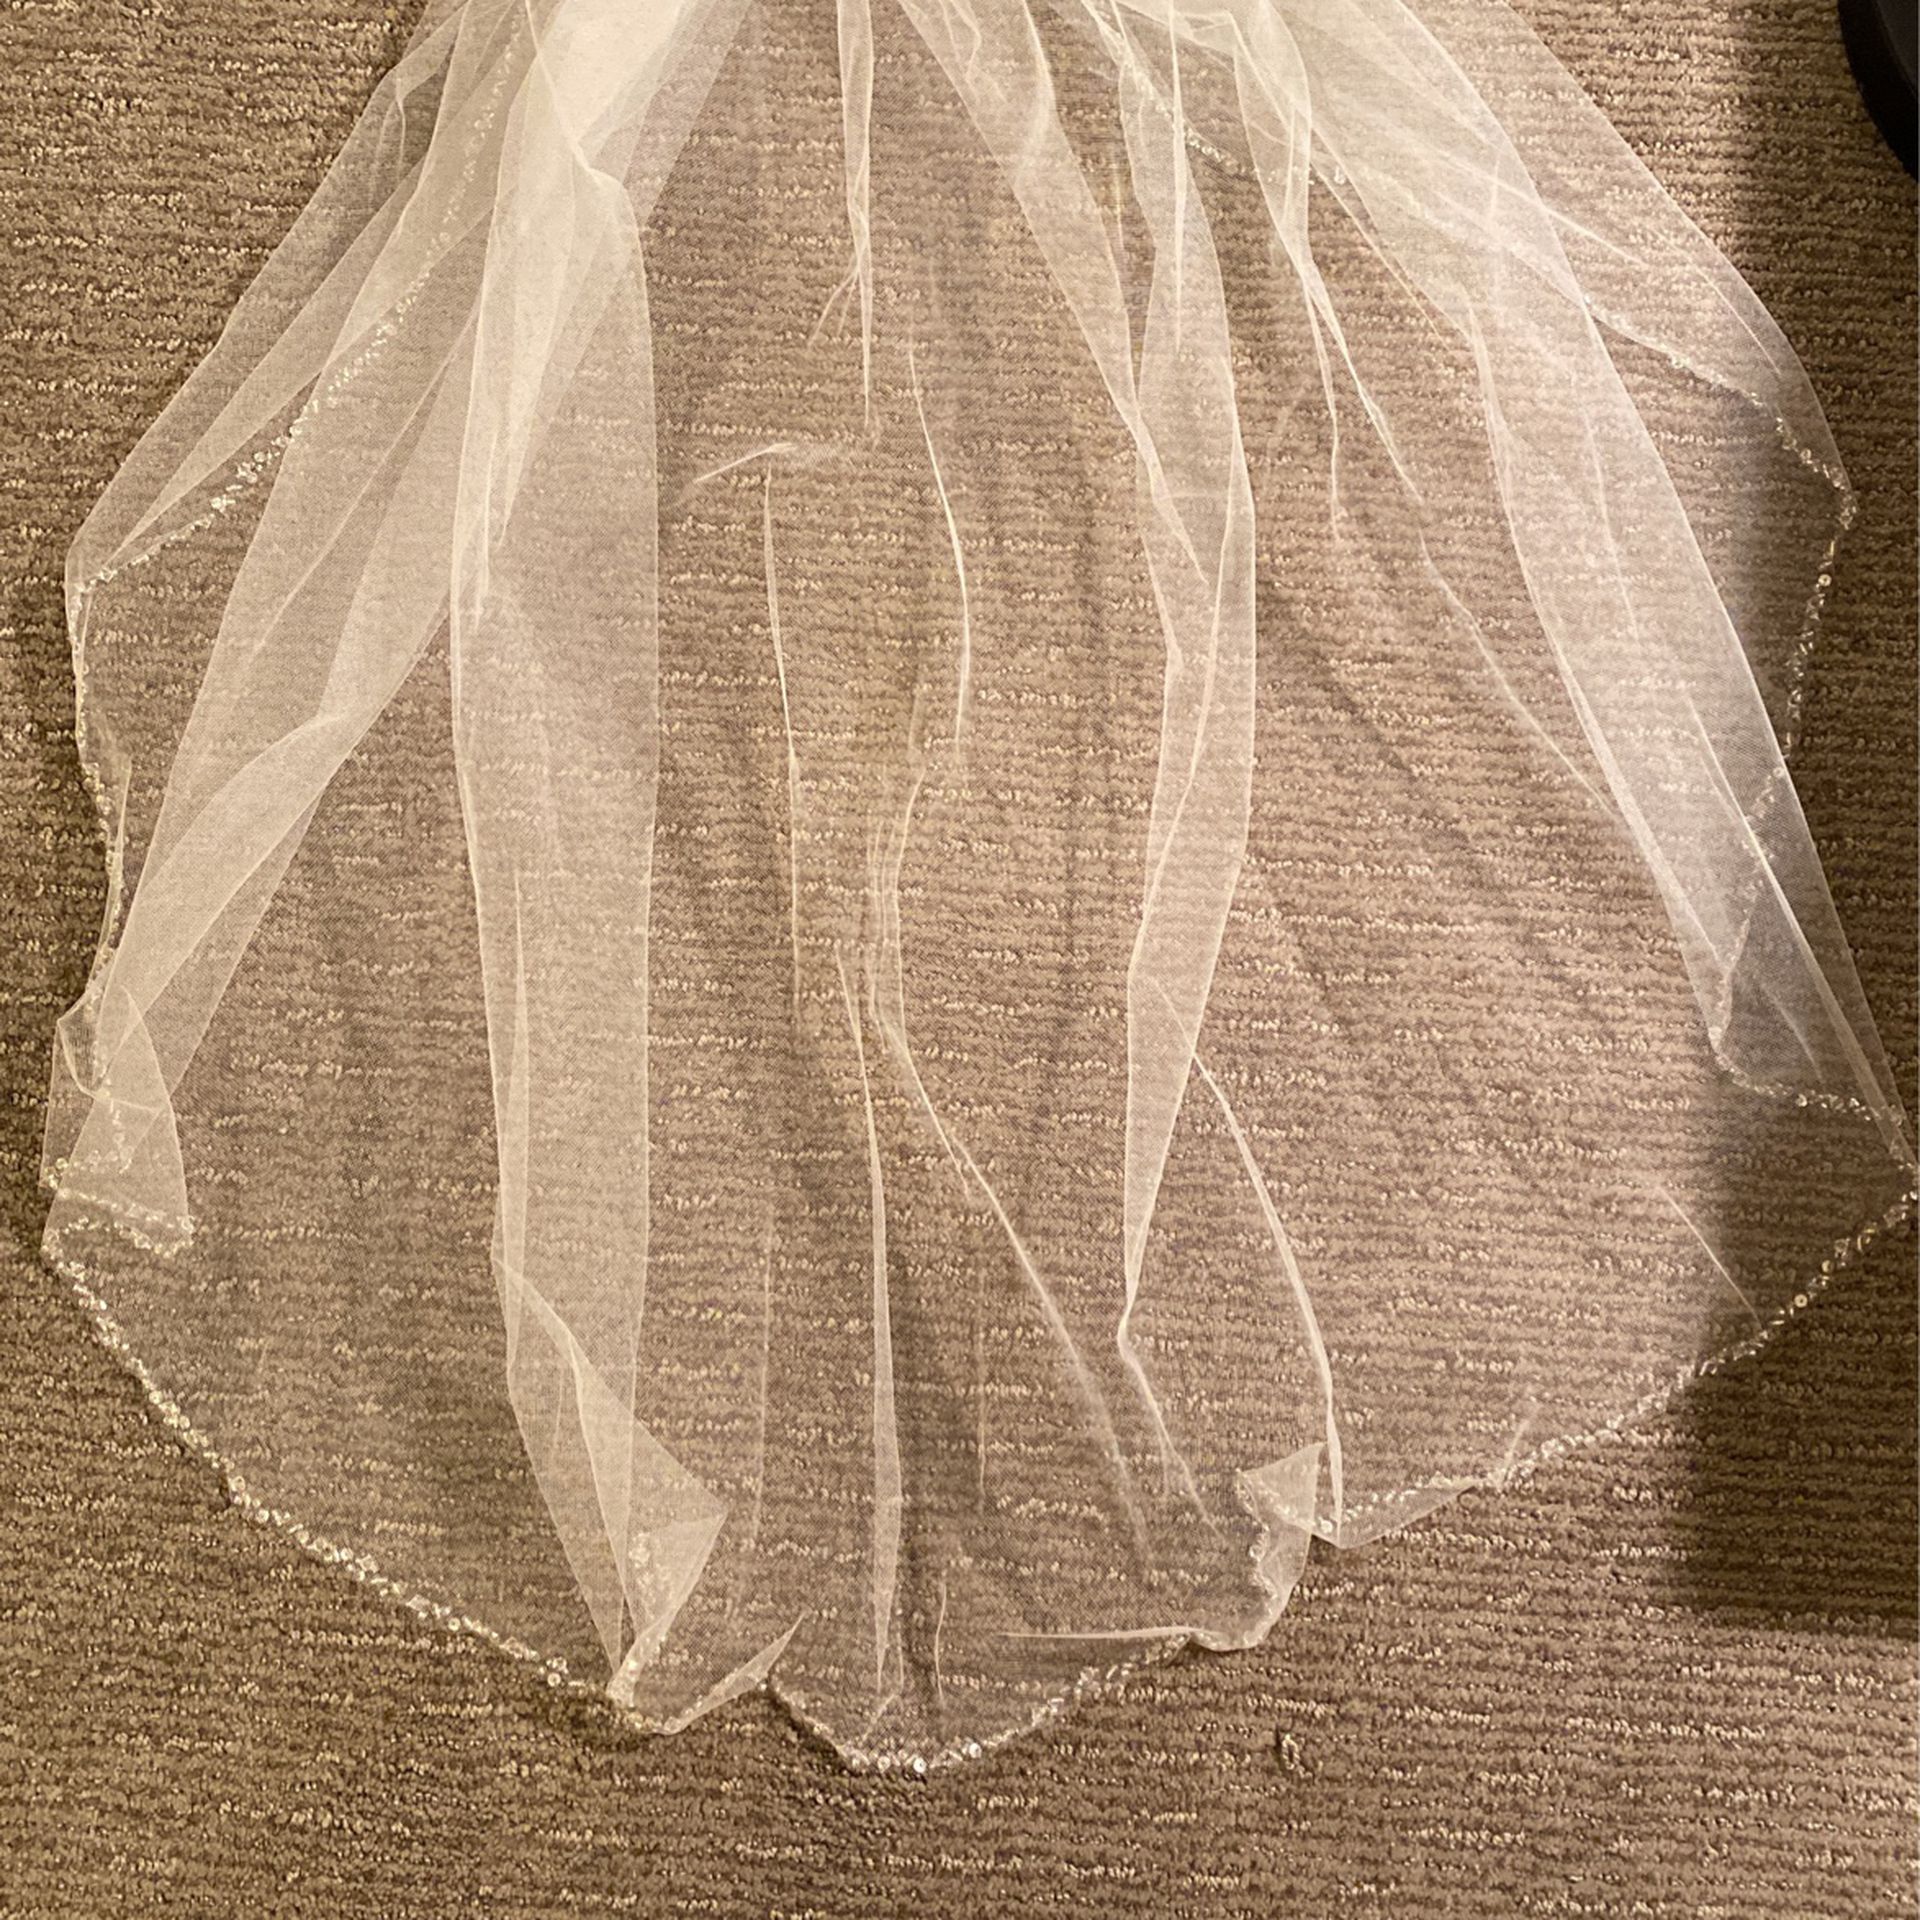 New Wedding Veil